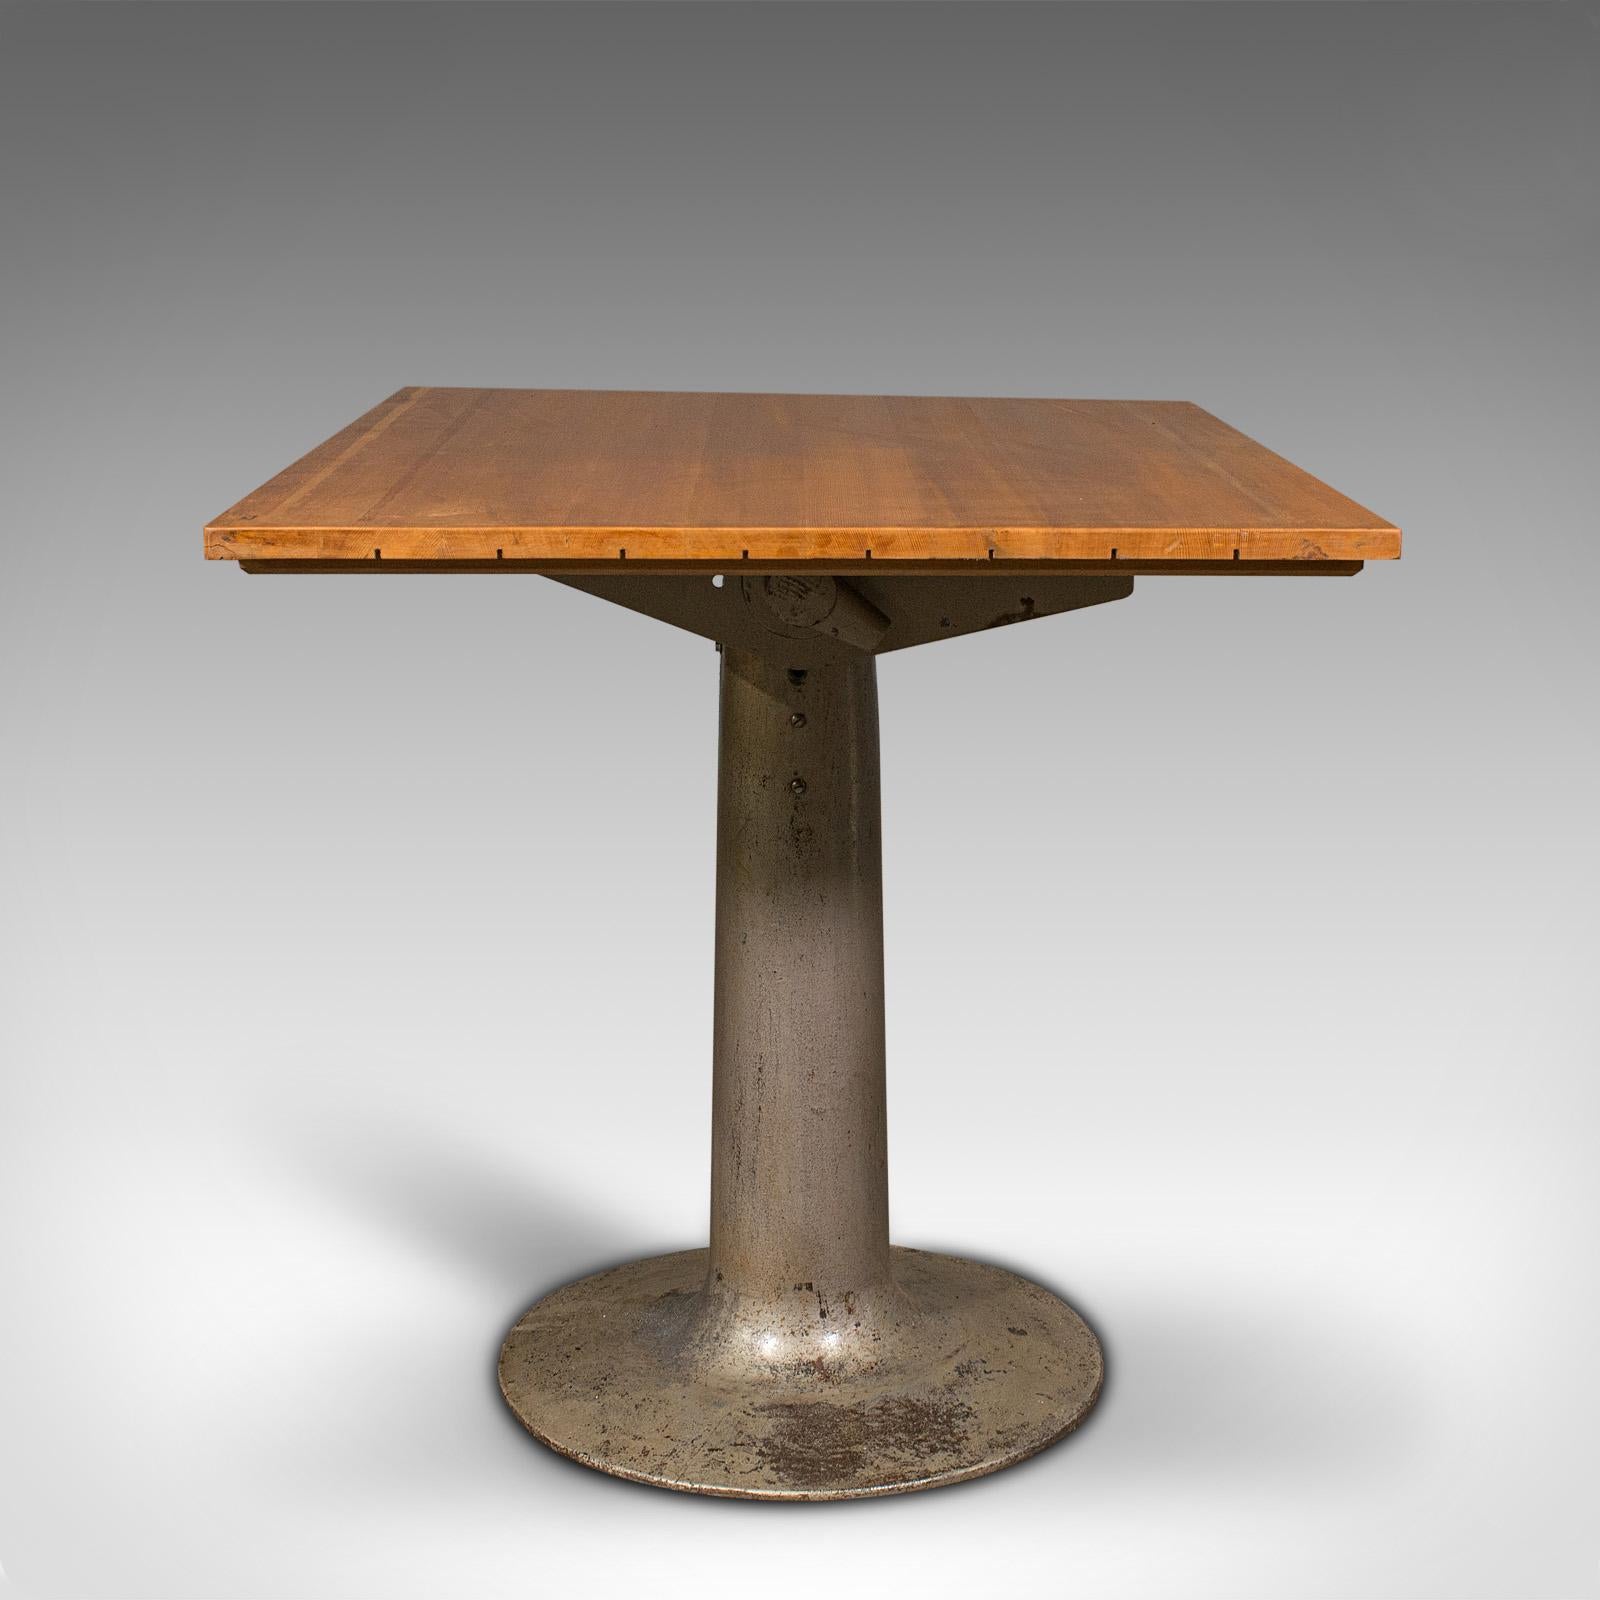 British Vintage Pedestal Table, English, Beech, Pine, Kitchen, Desk, Mid Century, C.1950 For Sale